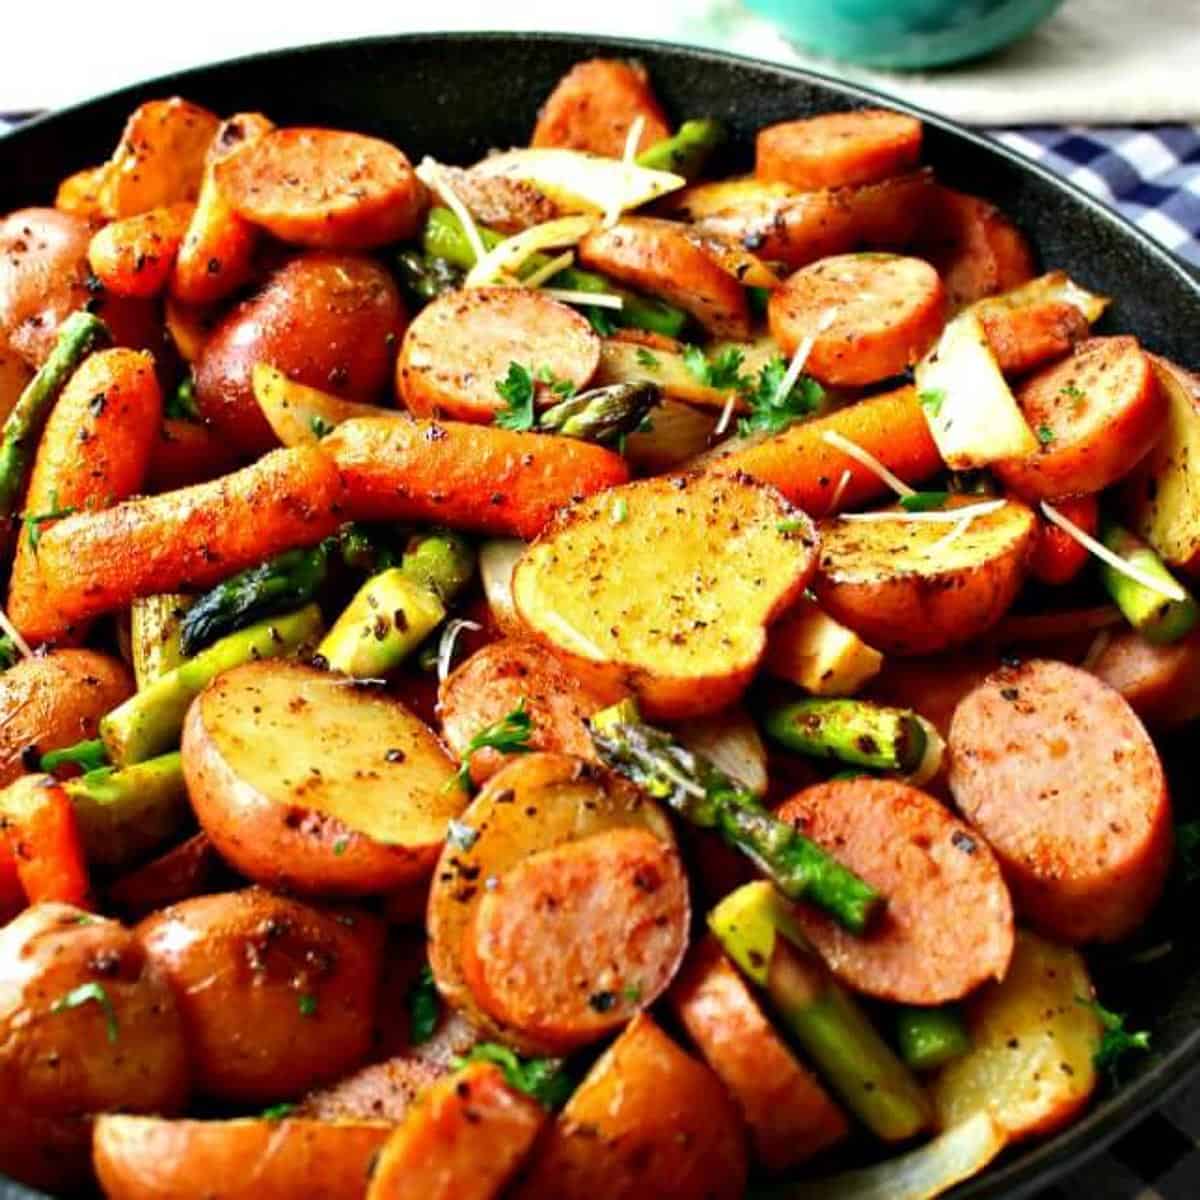 https://www.eatingonadime.com/wp-content/uploads/2020/07/roasted-sausage-square.jpg